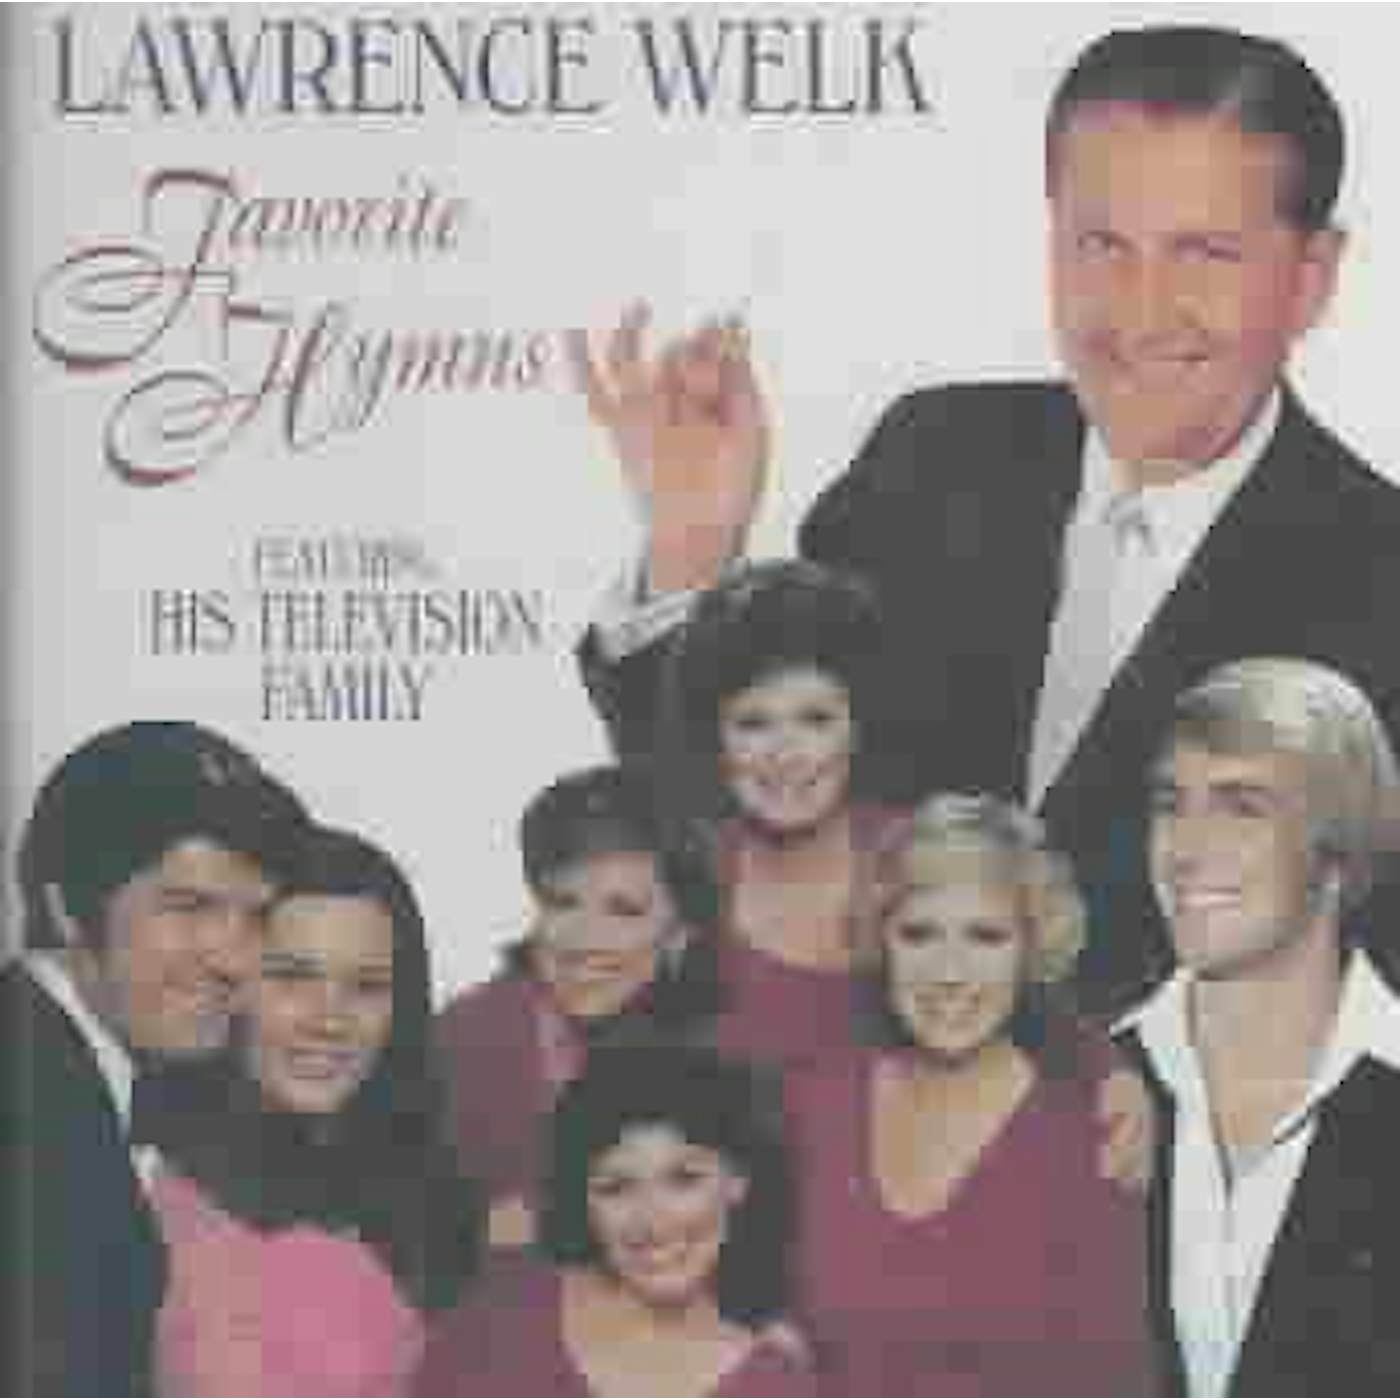 Lawrence Welk Favorite Hymns CD